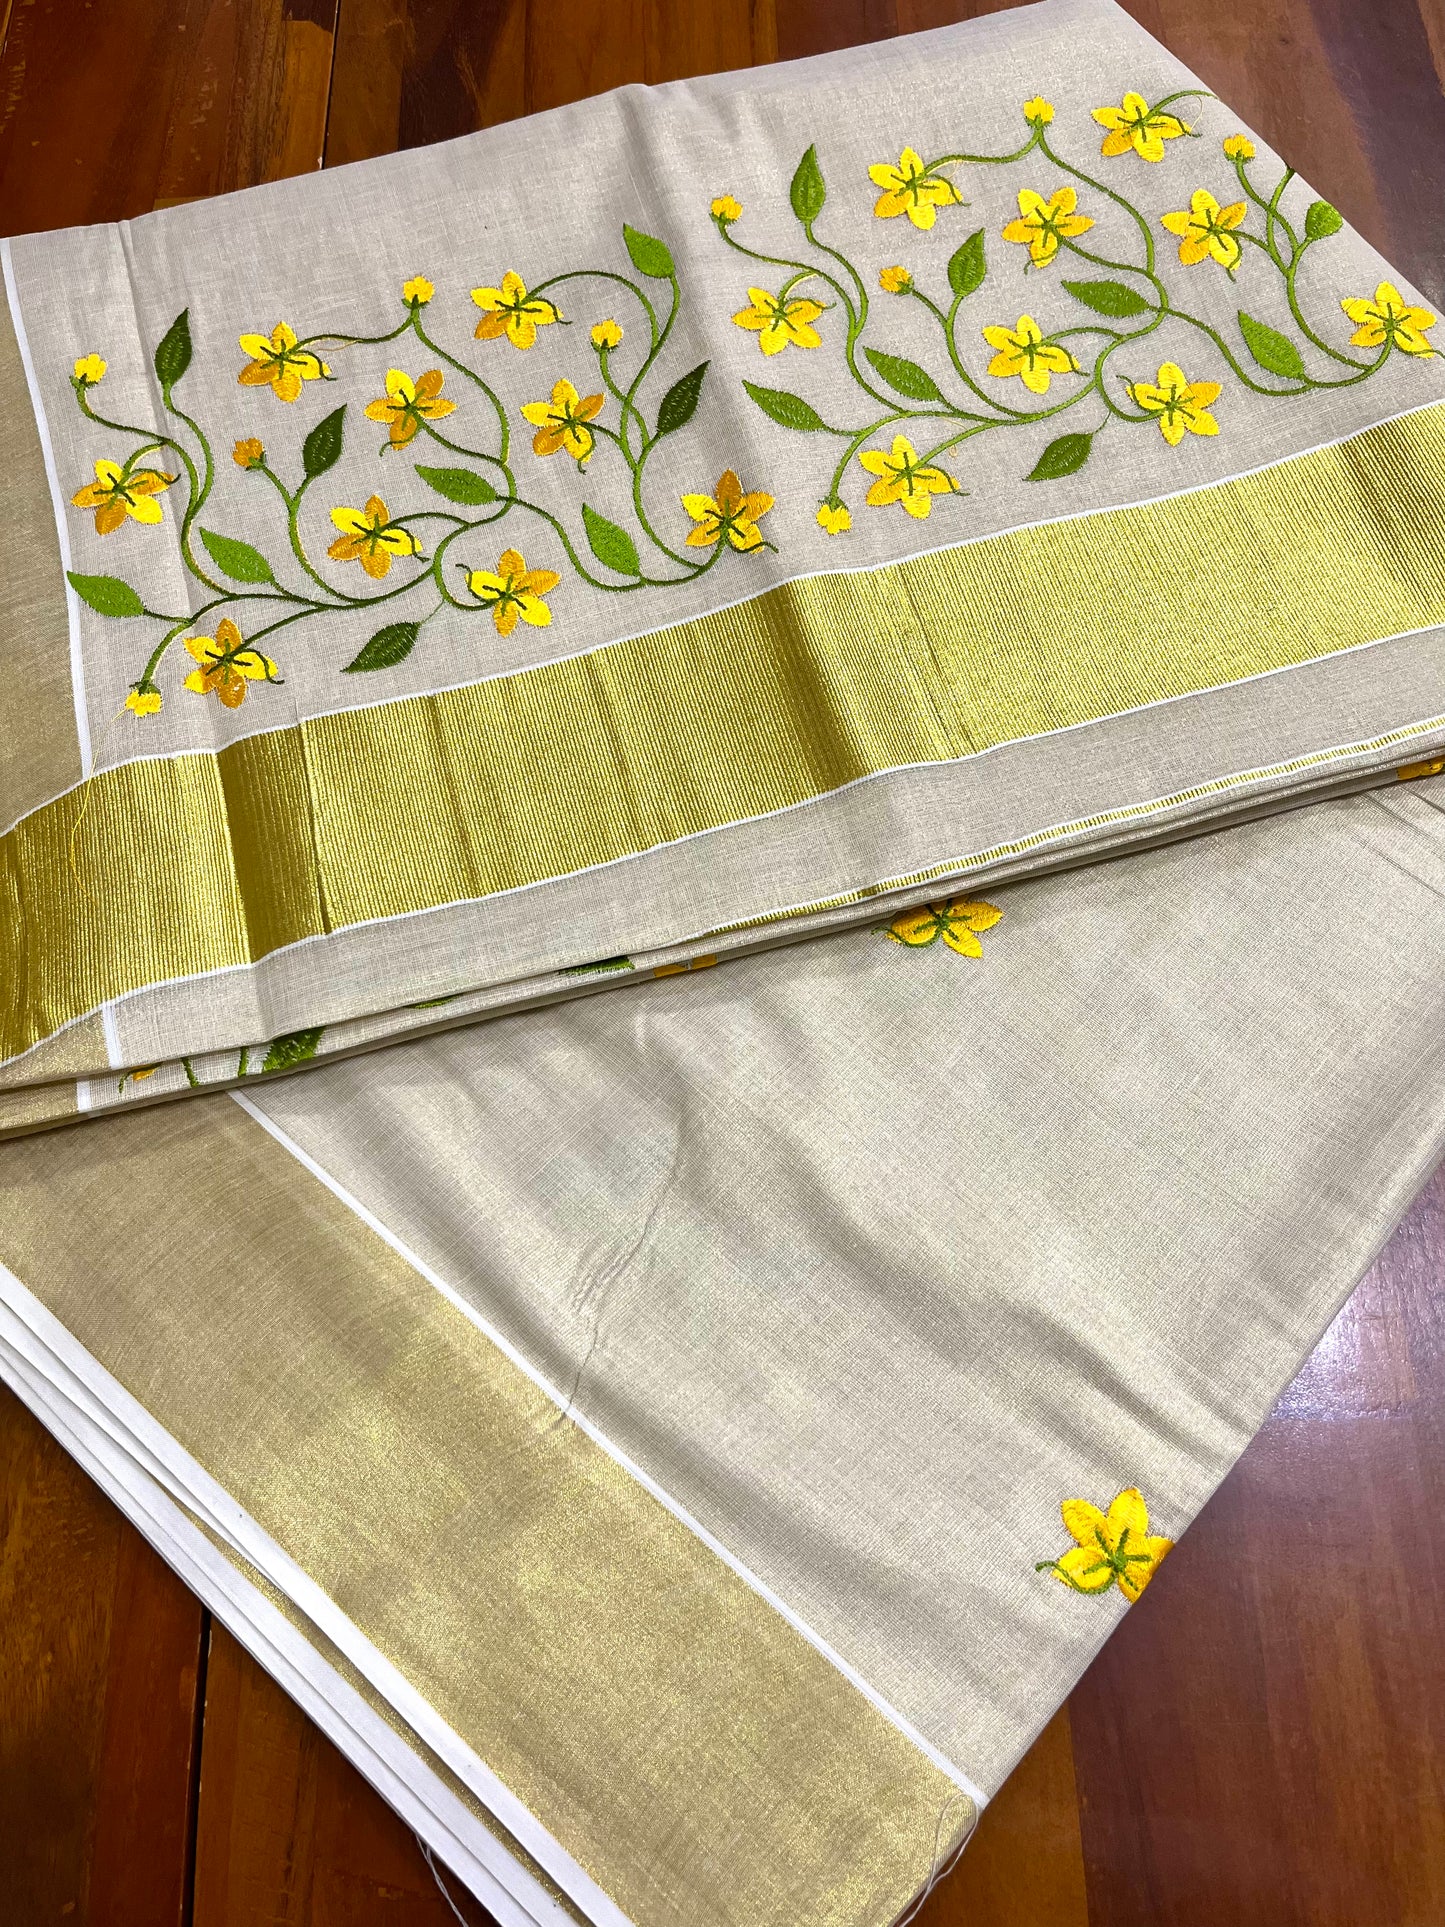 Southloom Tissue Cotton Kerala Kasavu Saree with Kanikonna Floral Embroidery on Body